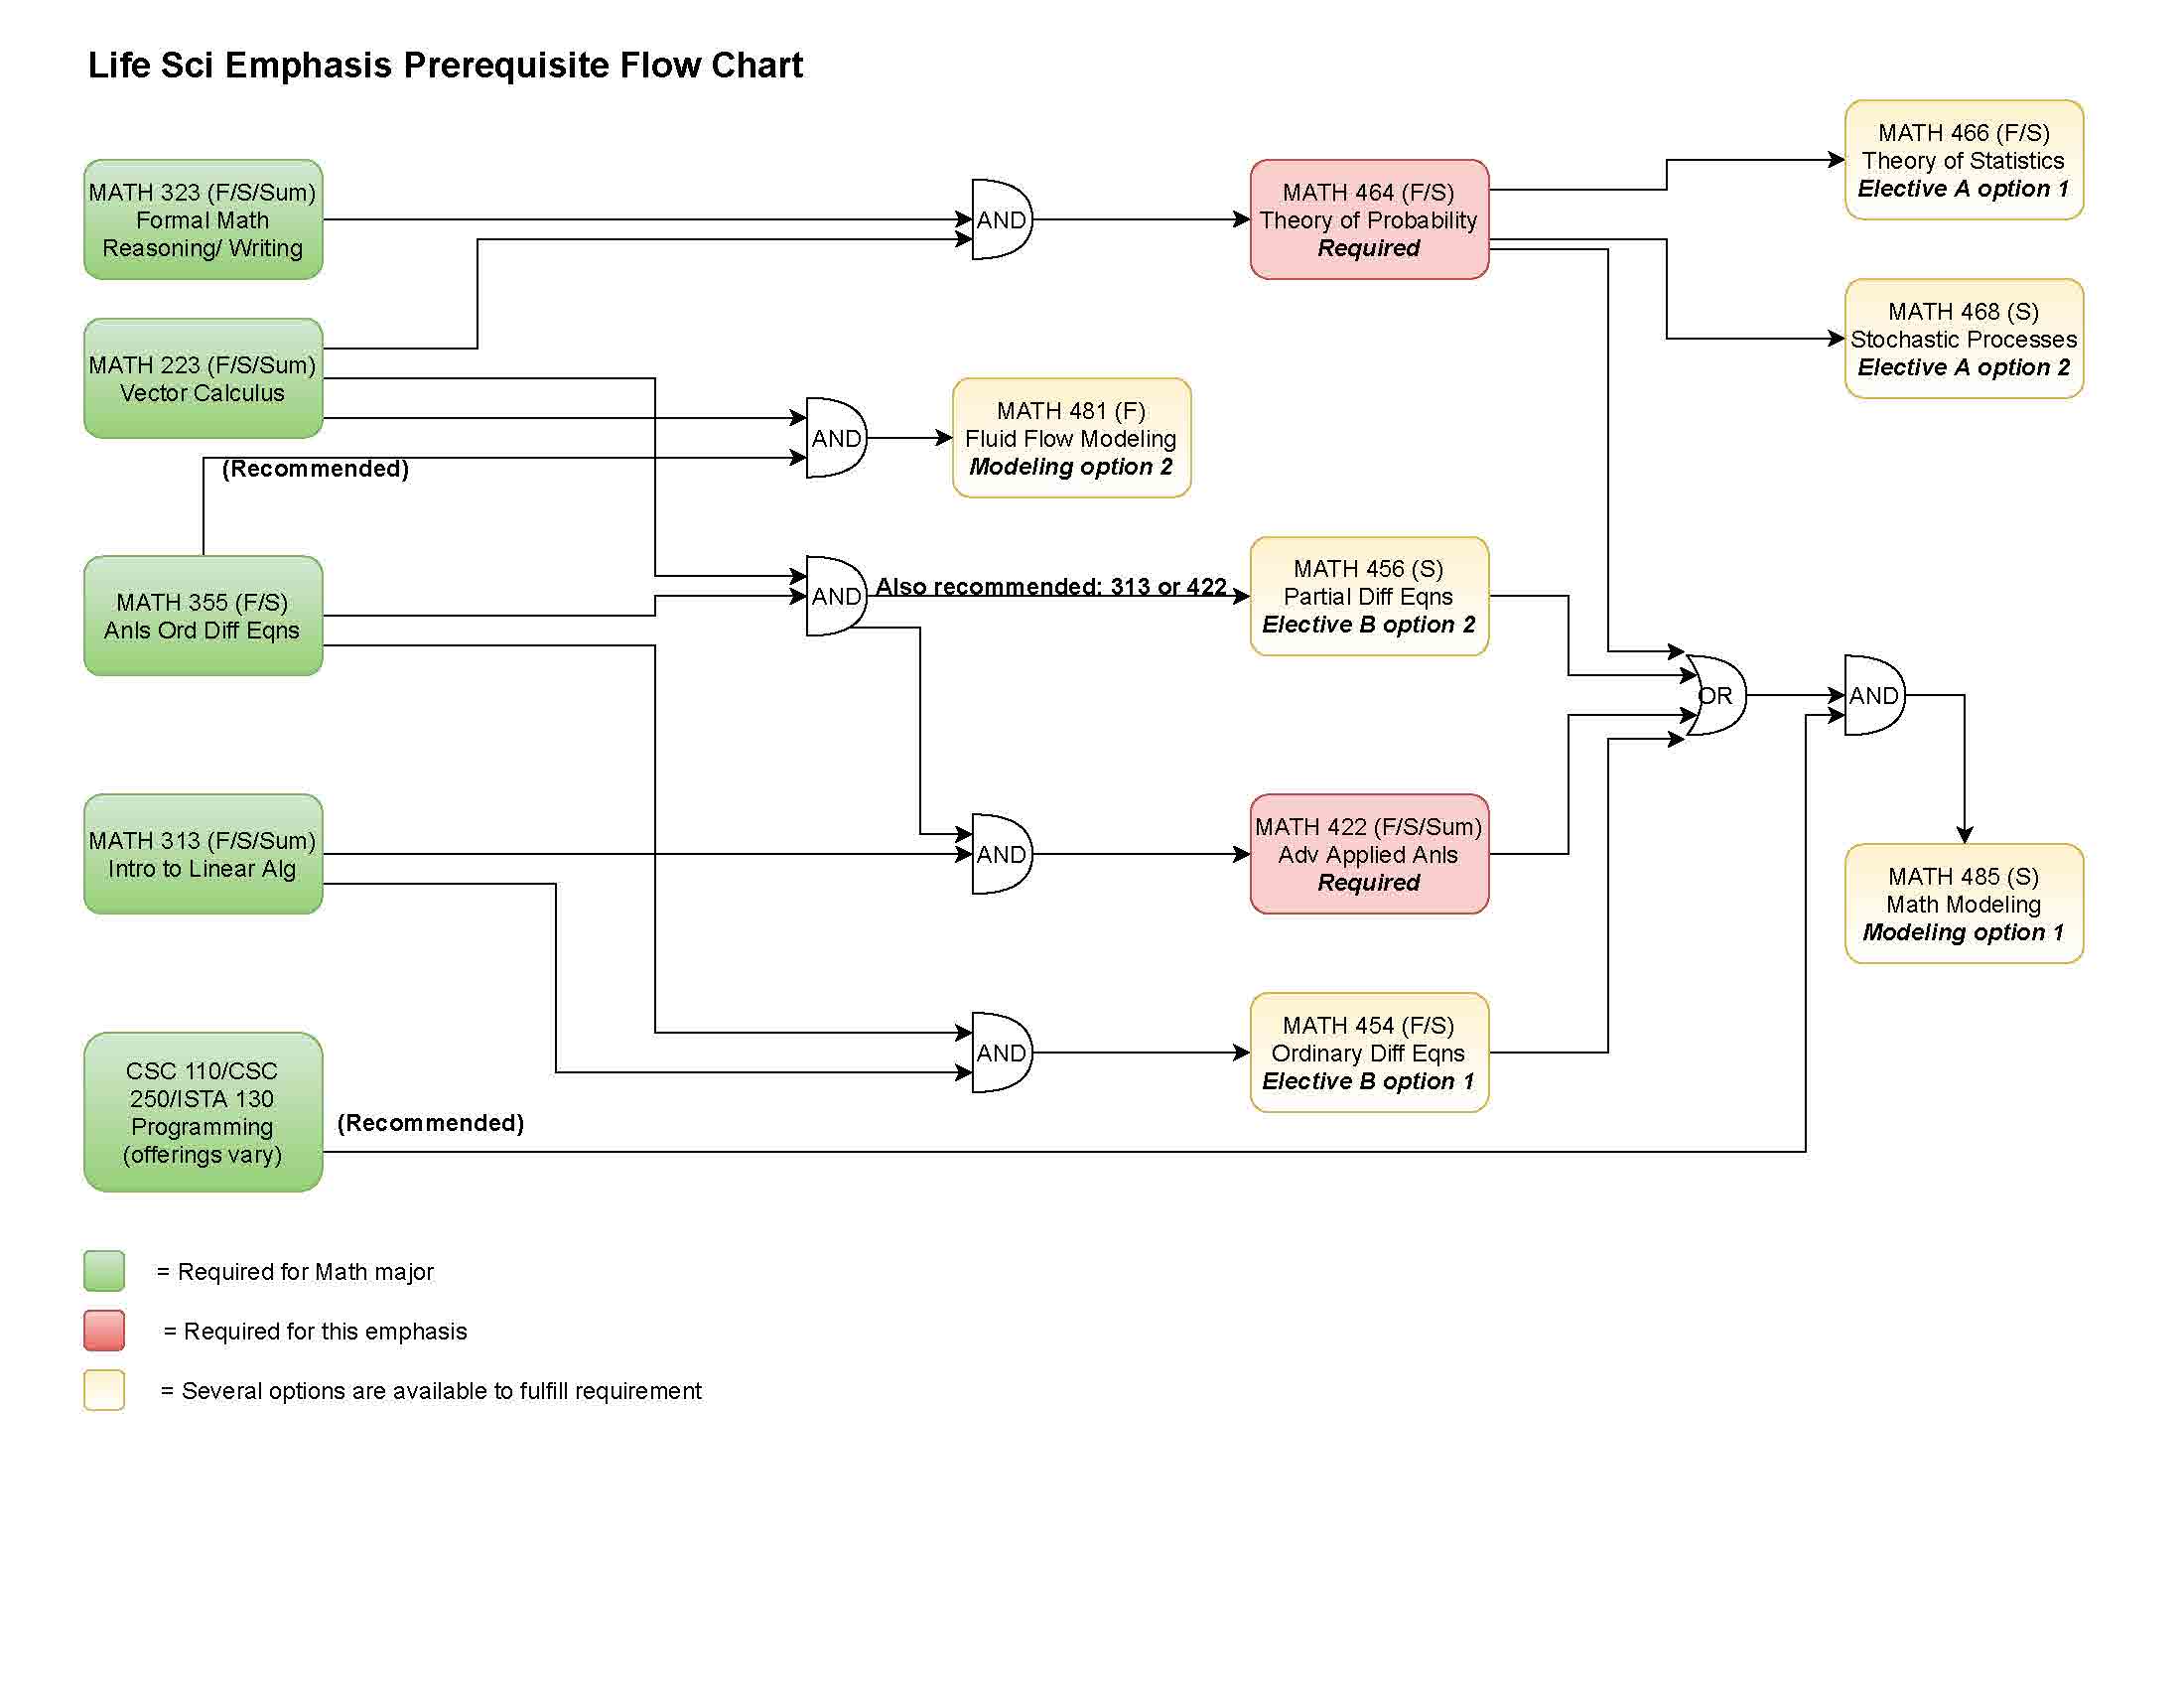 prerequisite flowchart for life sciences emphasis (click image for downloadable PDF)